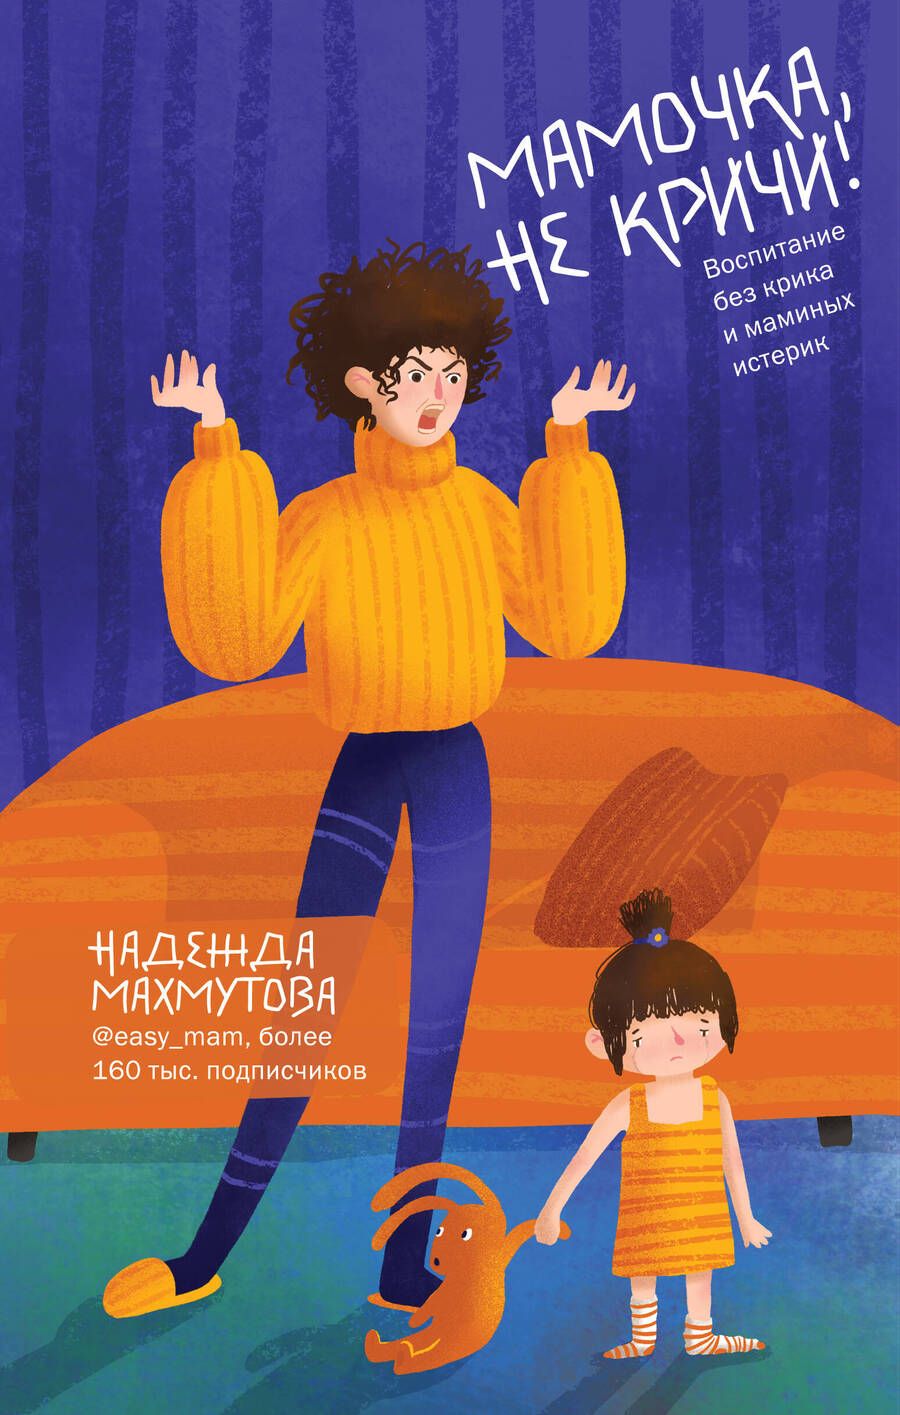 Обложка книги "Надежда Махмутова: Мамочка, не кричи! Воспитание без крика и маминых истерик"